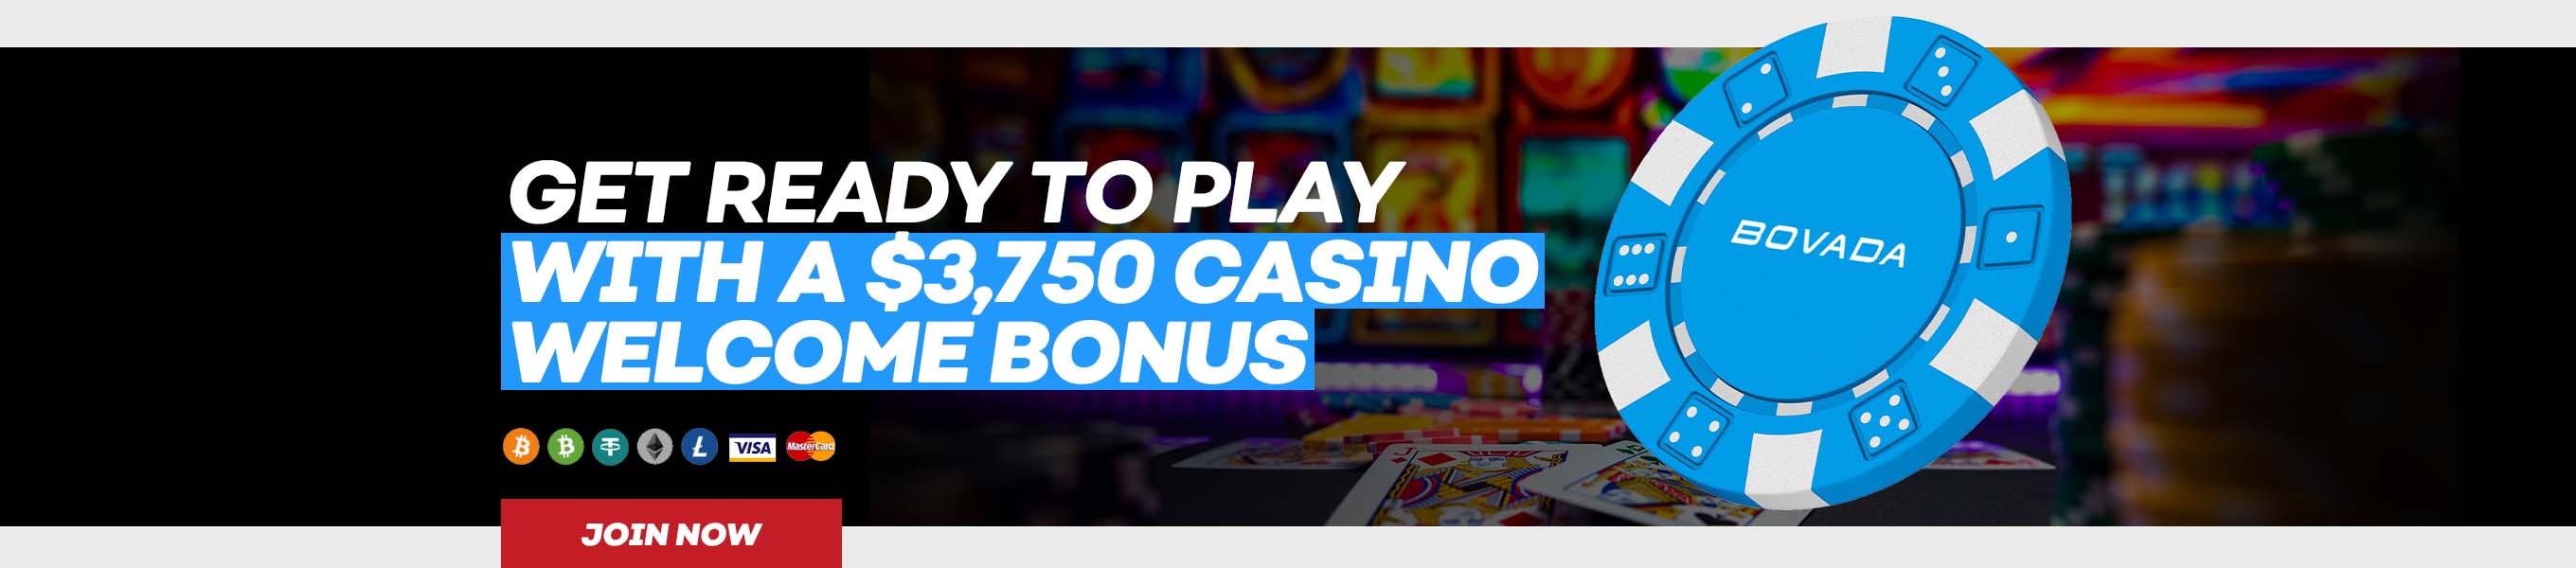 get up to $3,750 casino welcome bonus